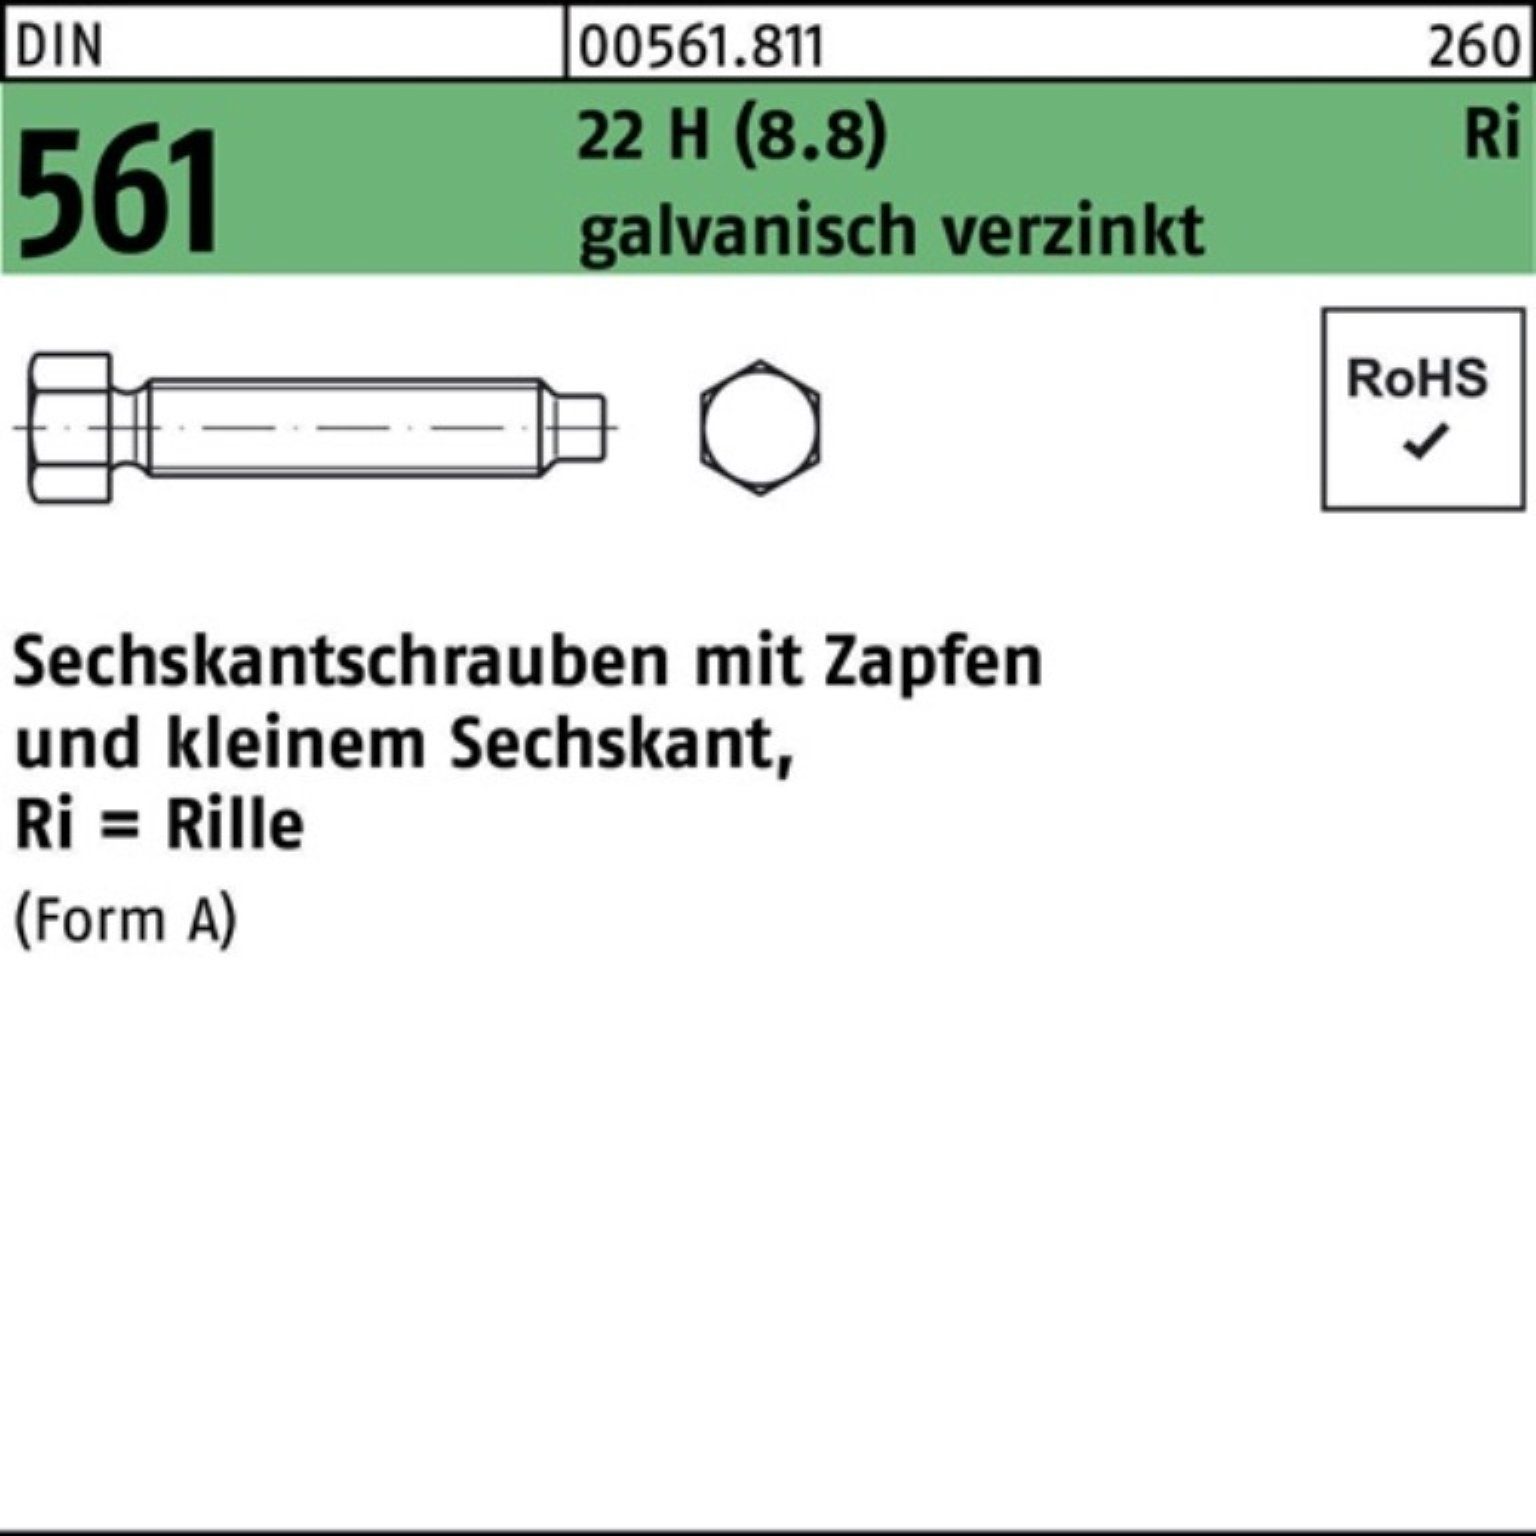 galv.v Reyher Zapfen Sechskantschraube H AM Sechskantschraube 561 22 Pack 100er DIN 20x90 (8.8)